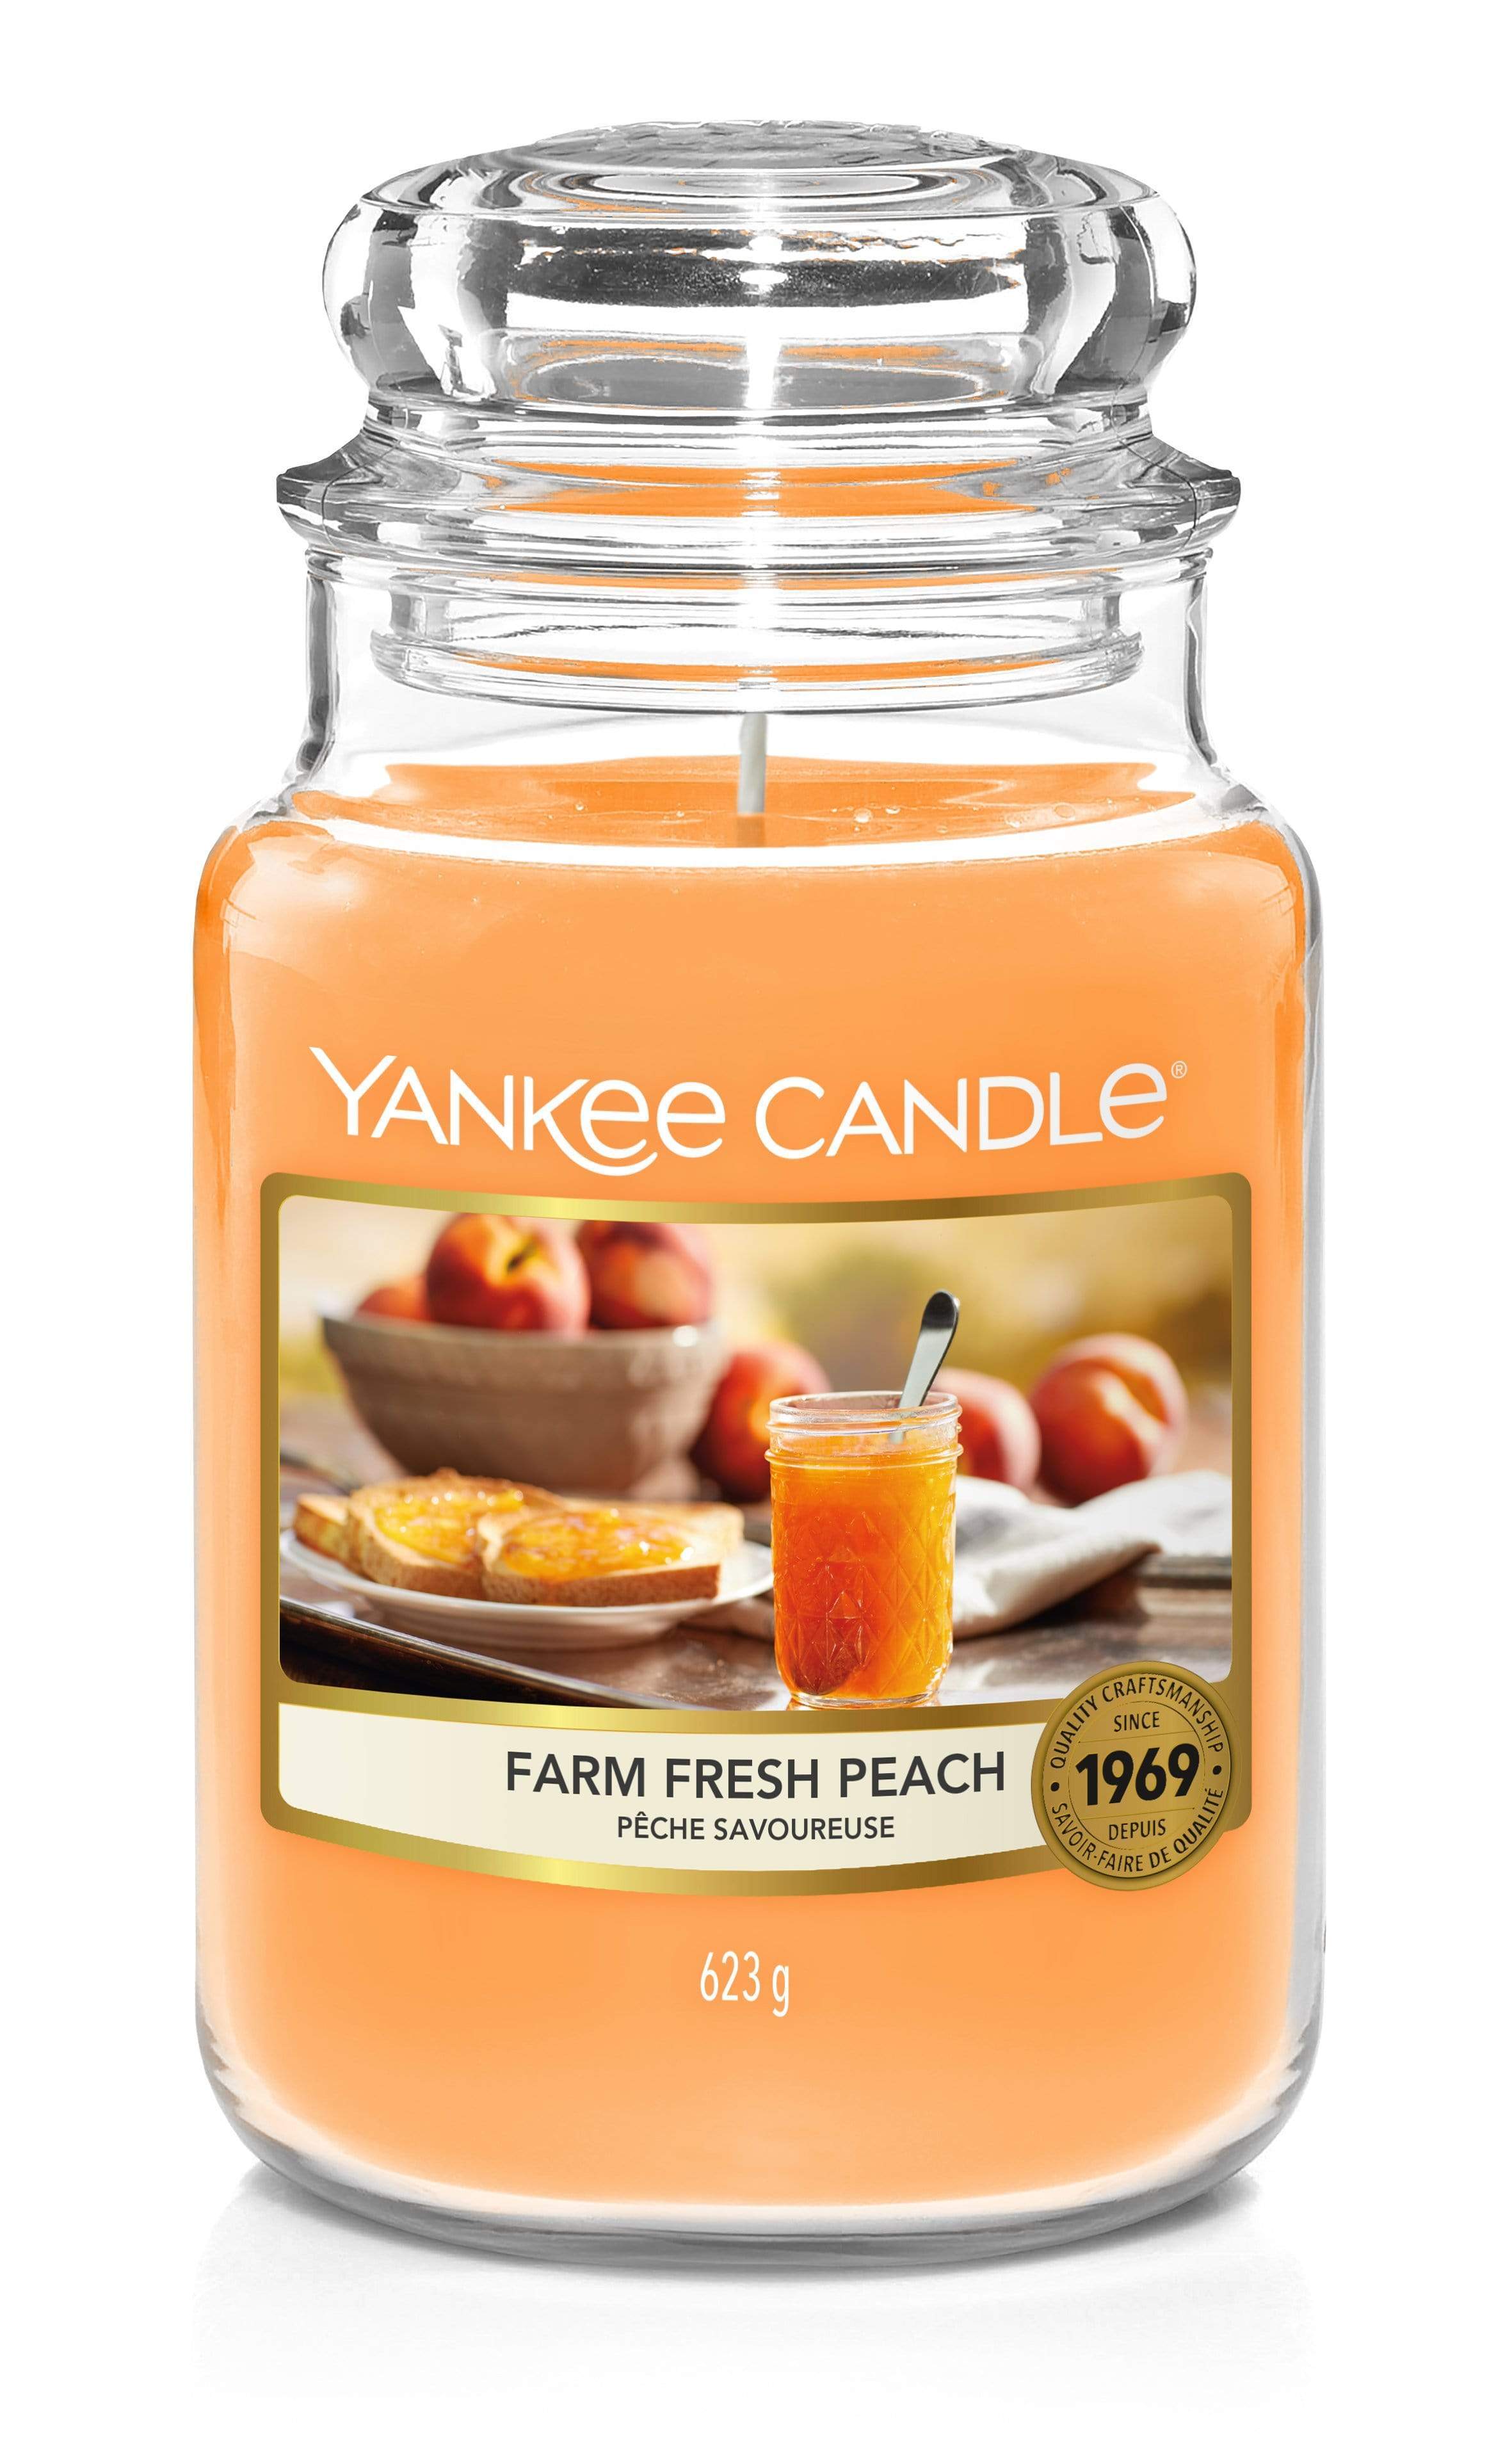 Yankee Candle Large Jar Candle Yankee Candle Large Jar - Farm Fresh Peach